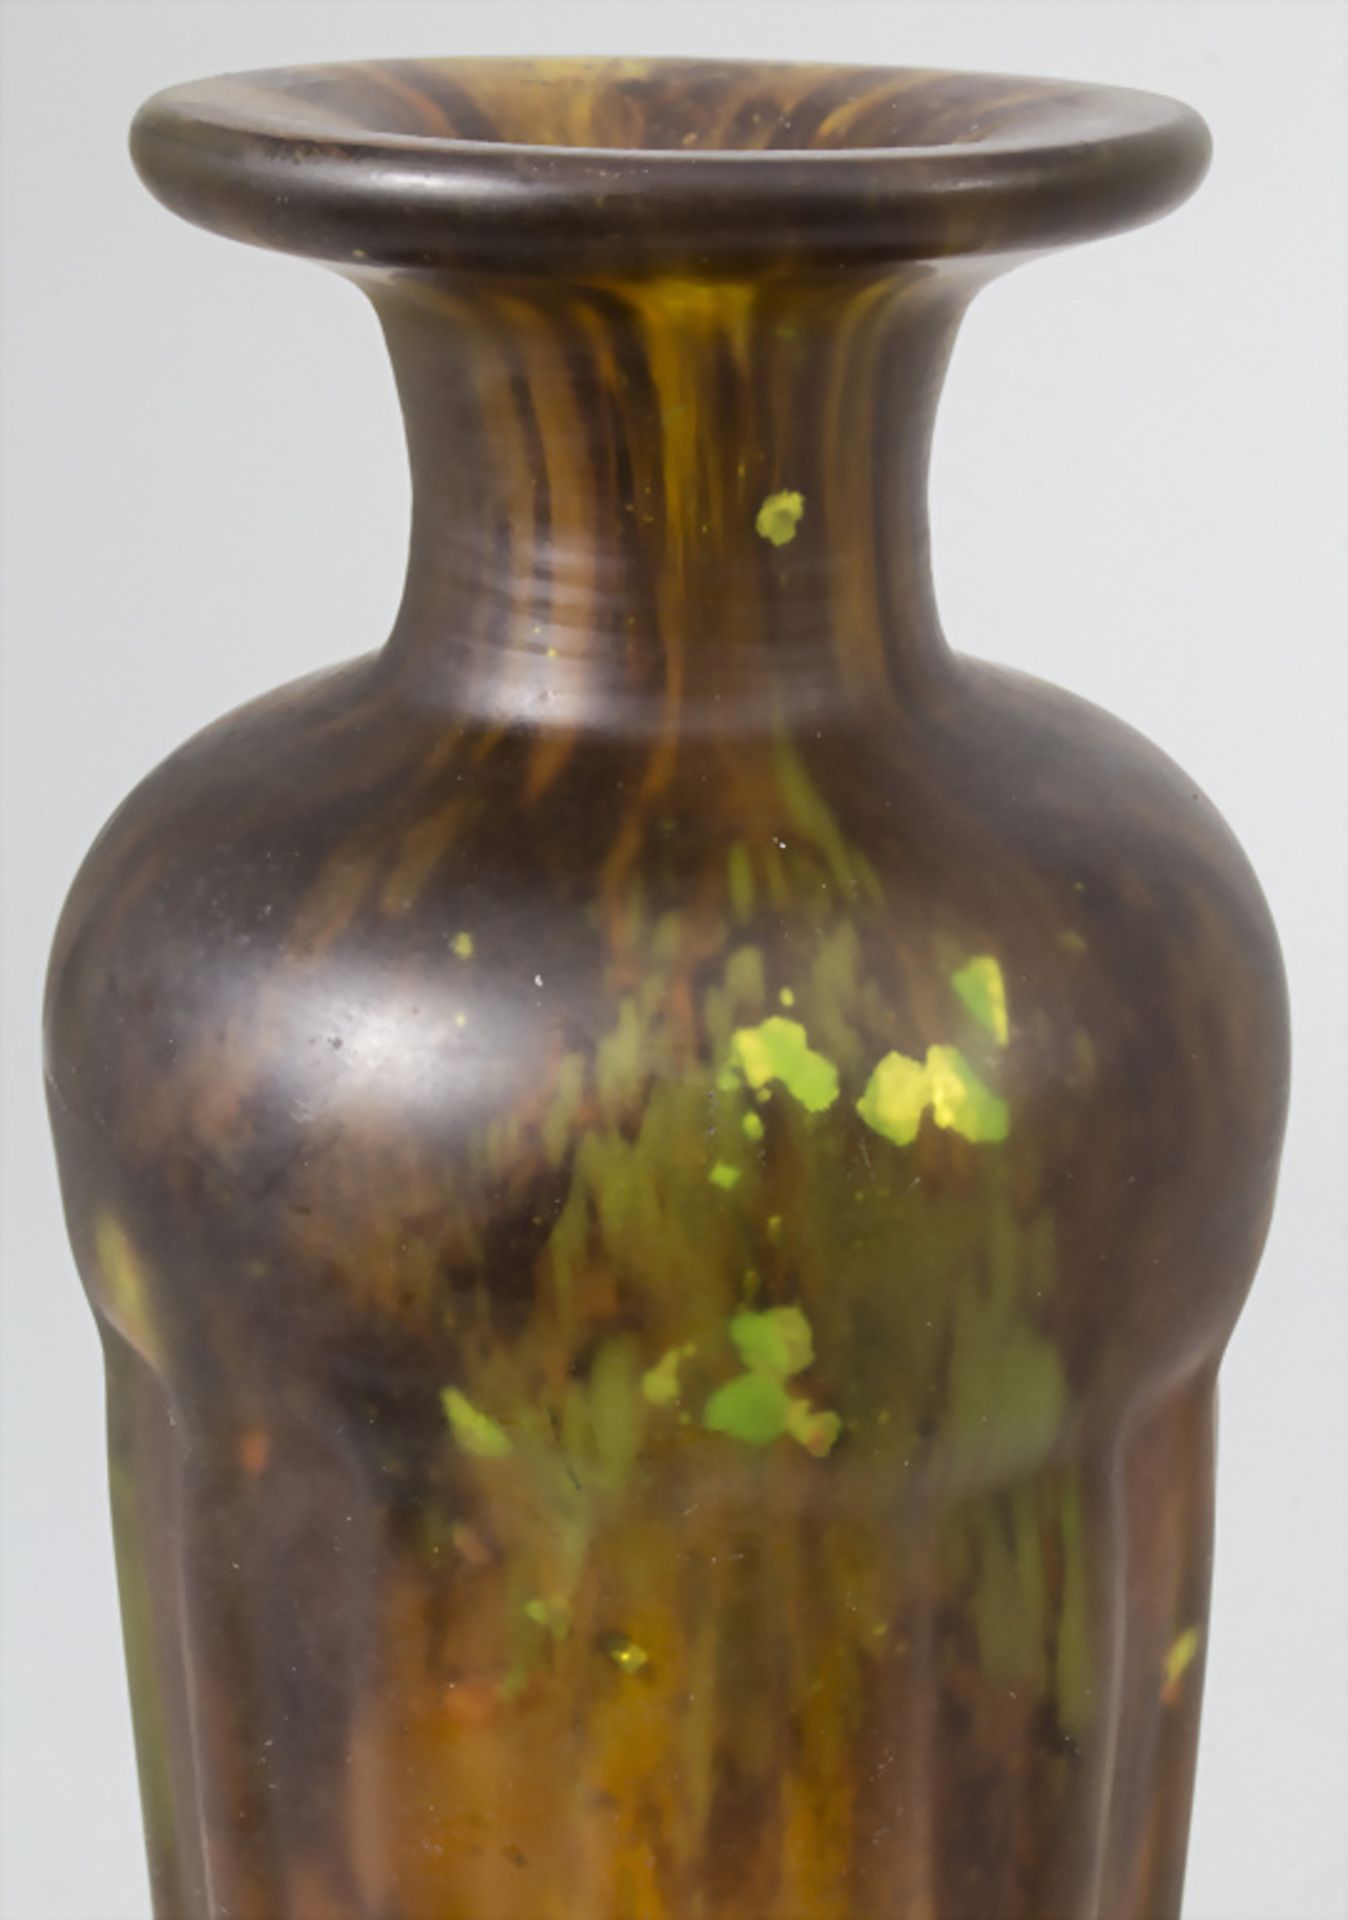 Jugendstil Vase / Art Nouveau glass vase, Daum Frères, Ecole de Nancy, Frankreich, um 1900 - Image 6 of 7